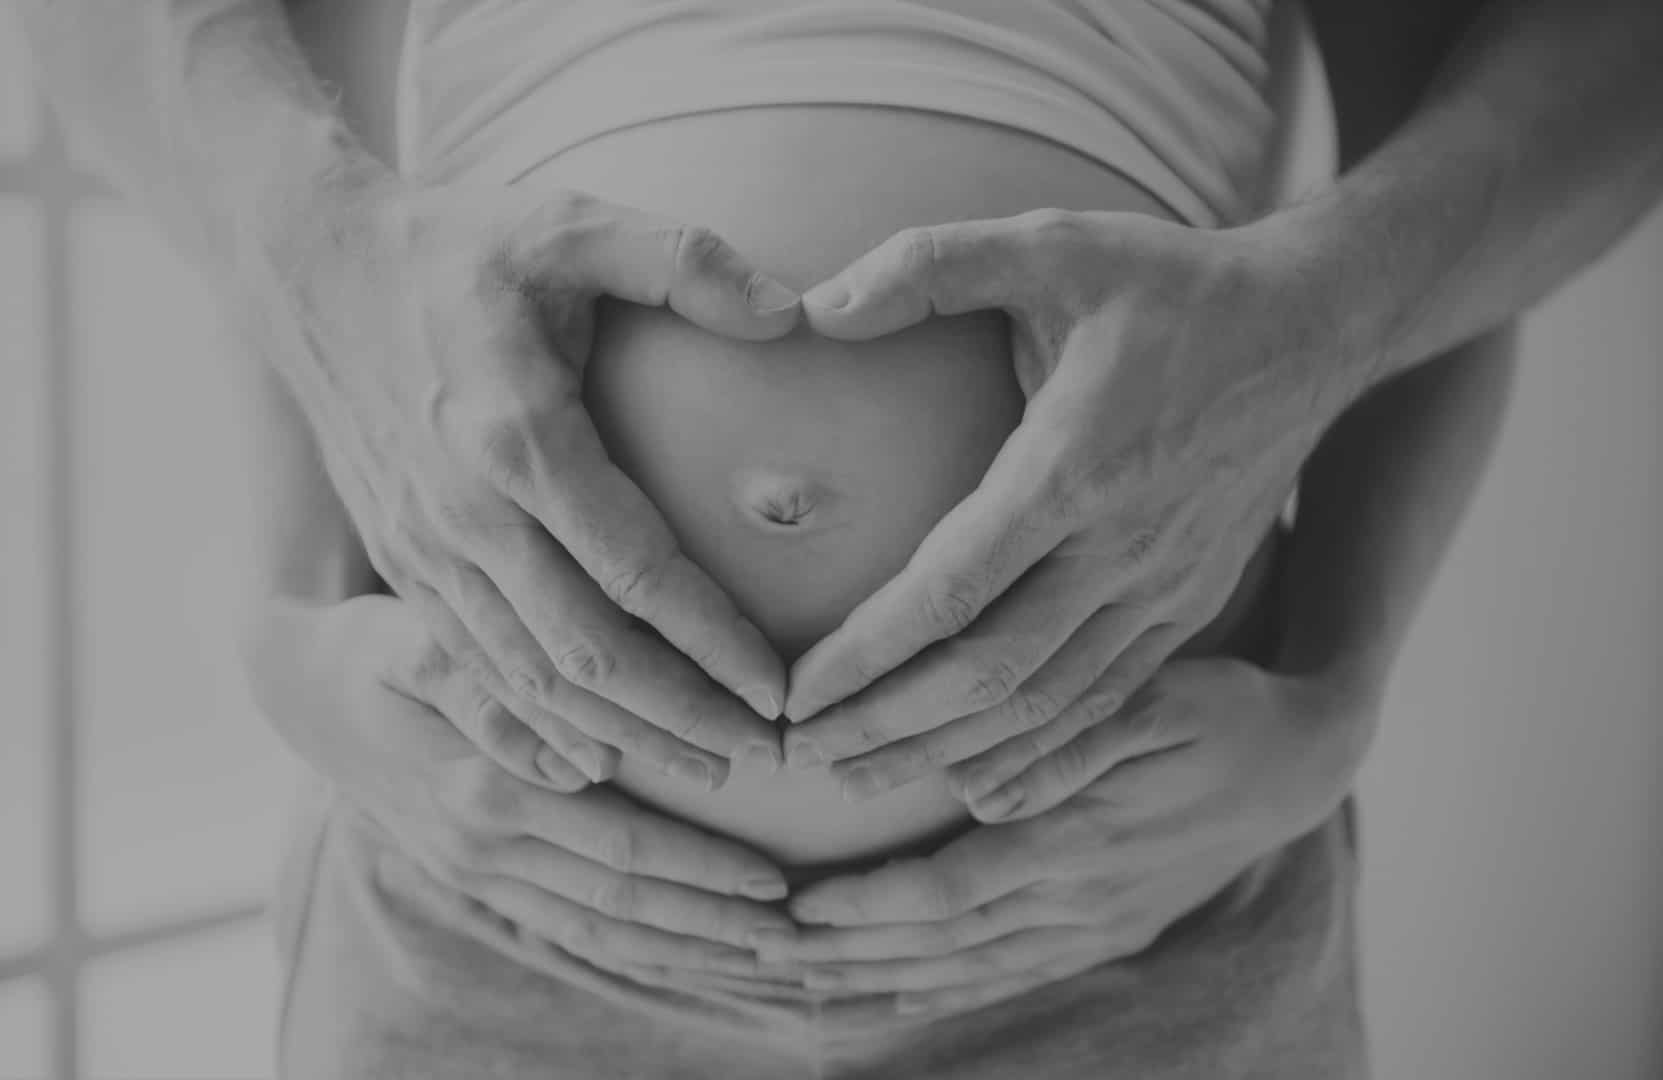 Hire a Birth & Postpartum Doula - Emily Edgar Doula